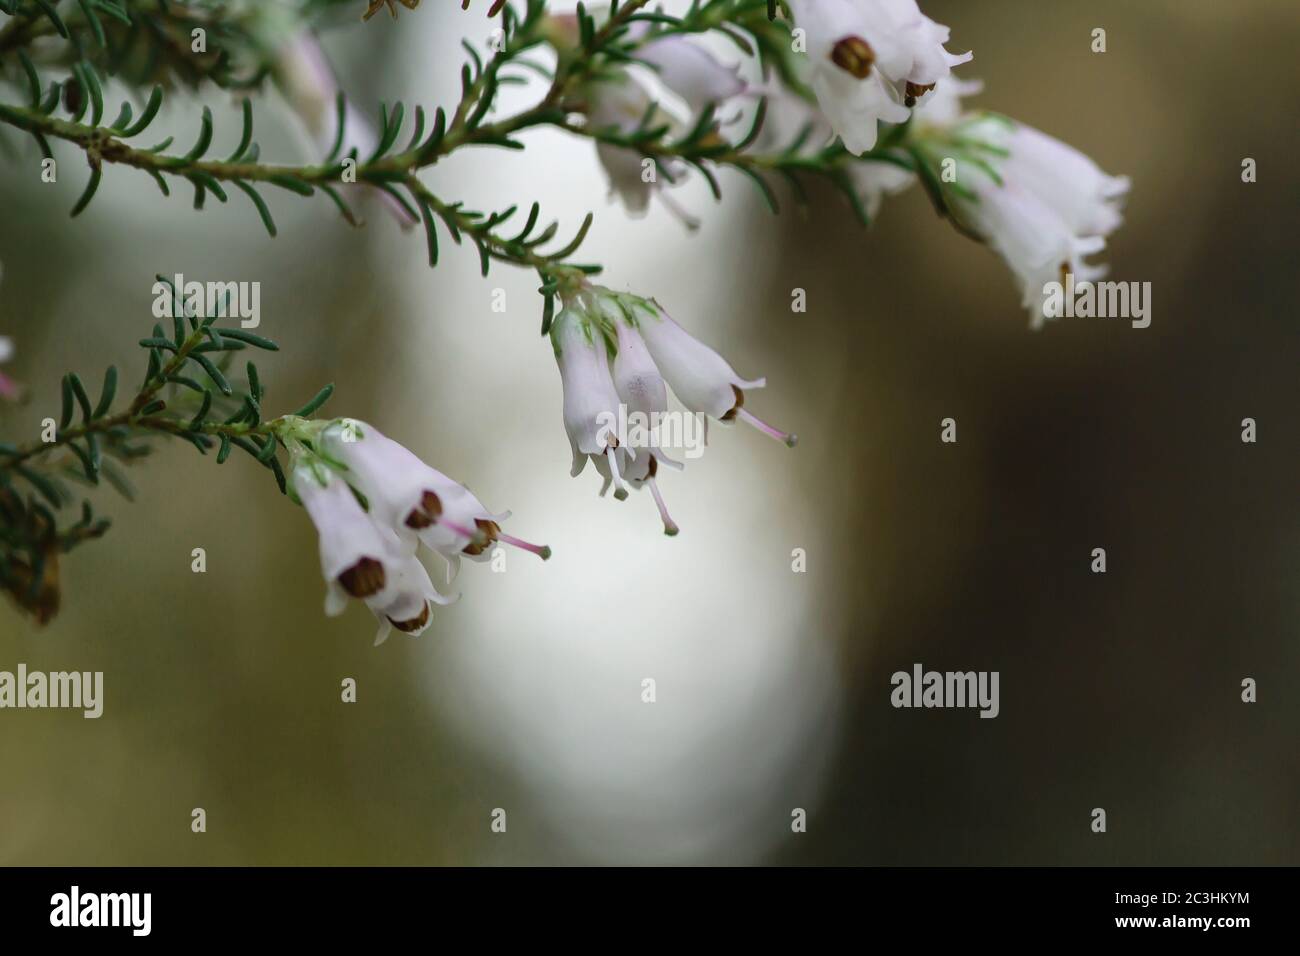 Detail of erica arborea or tree heath white flowers blooming Stock Photo